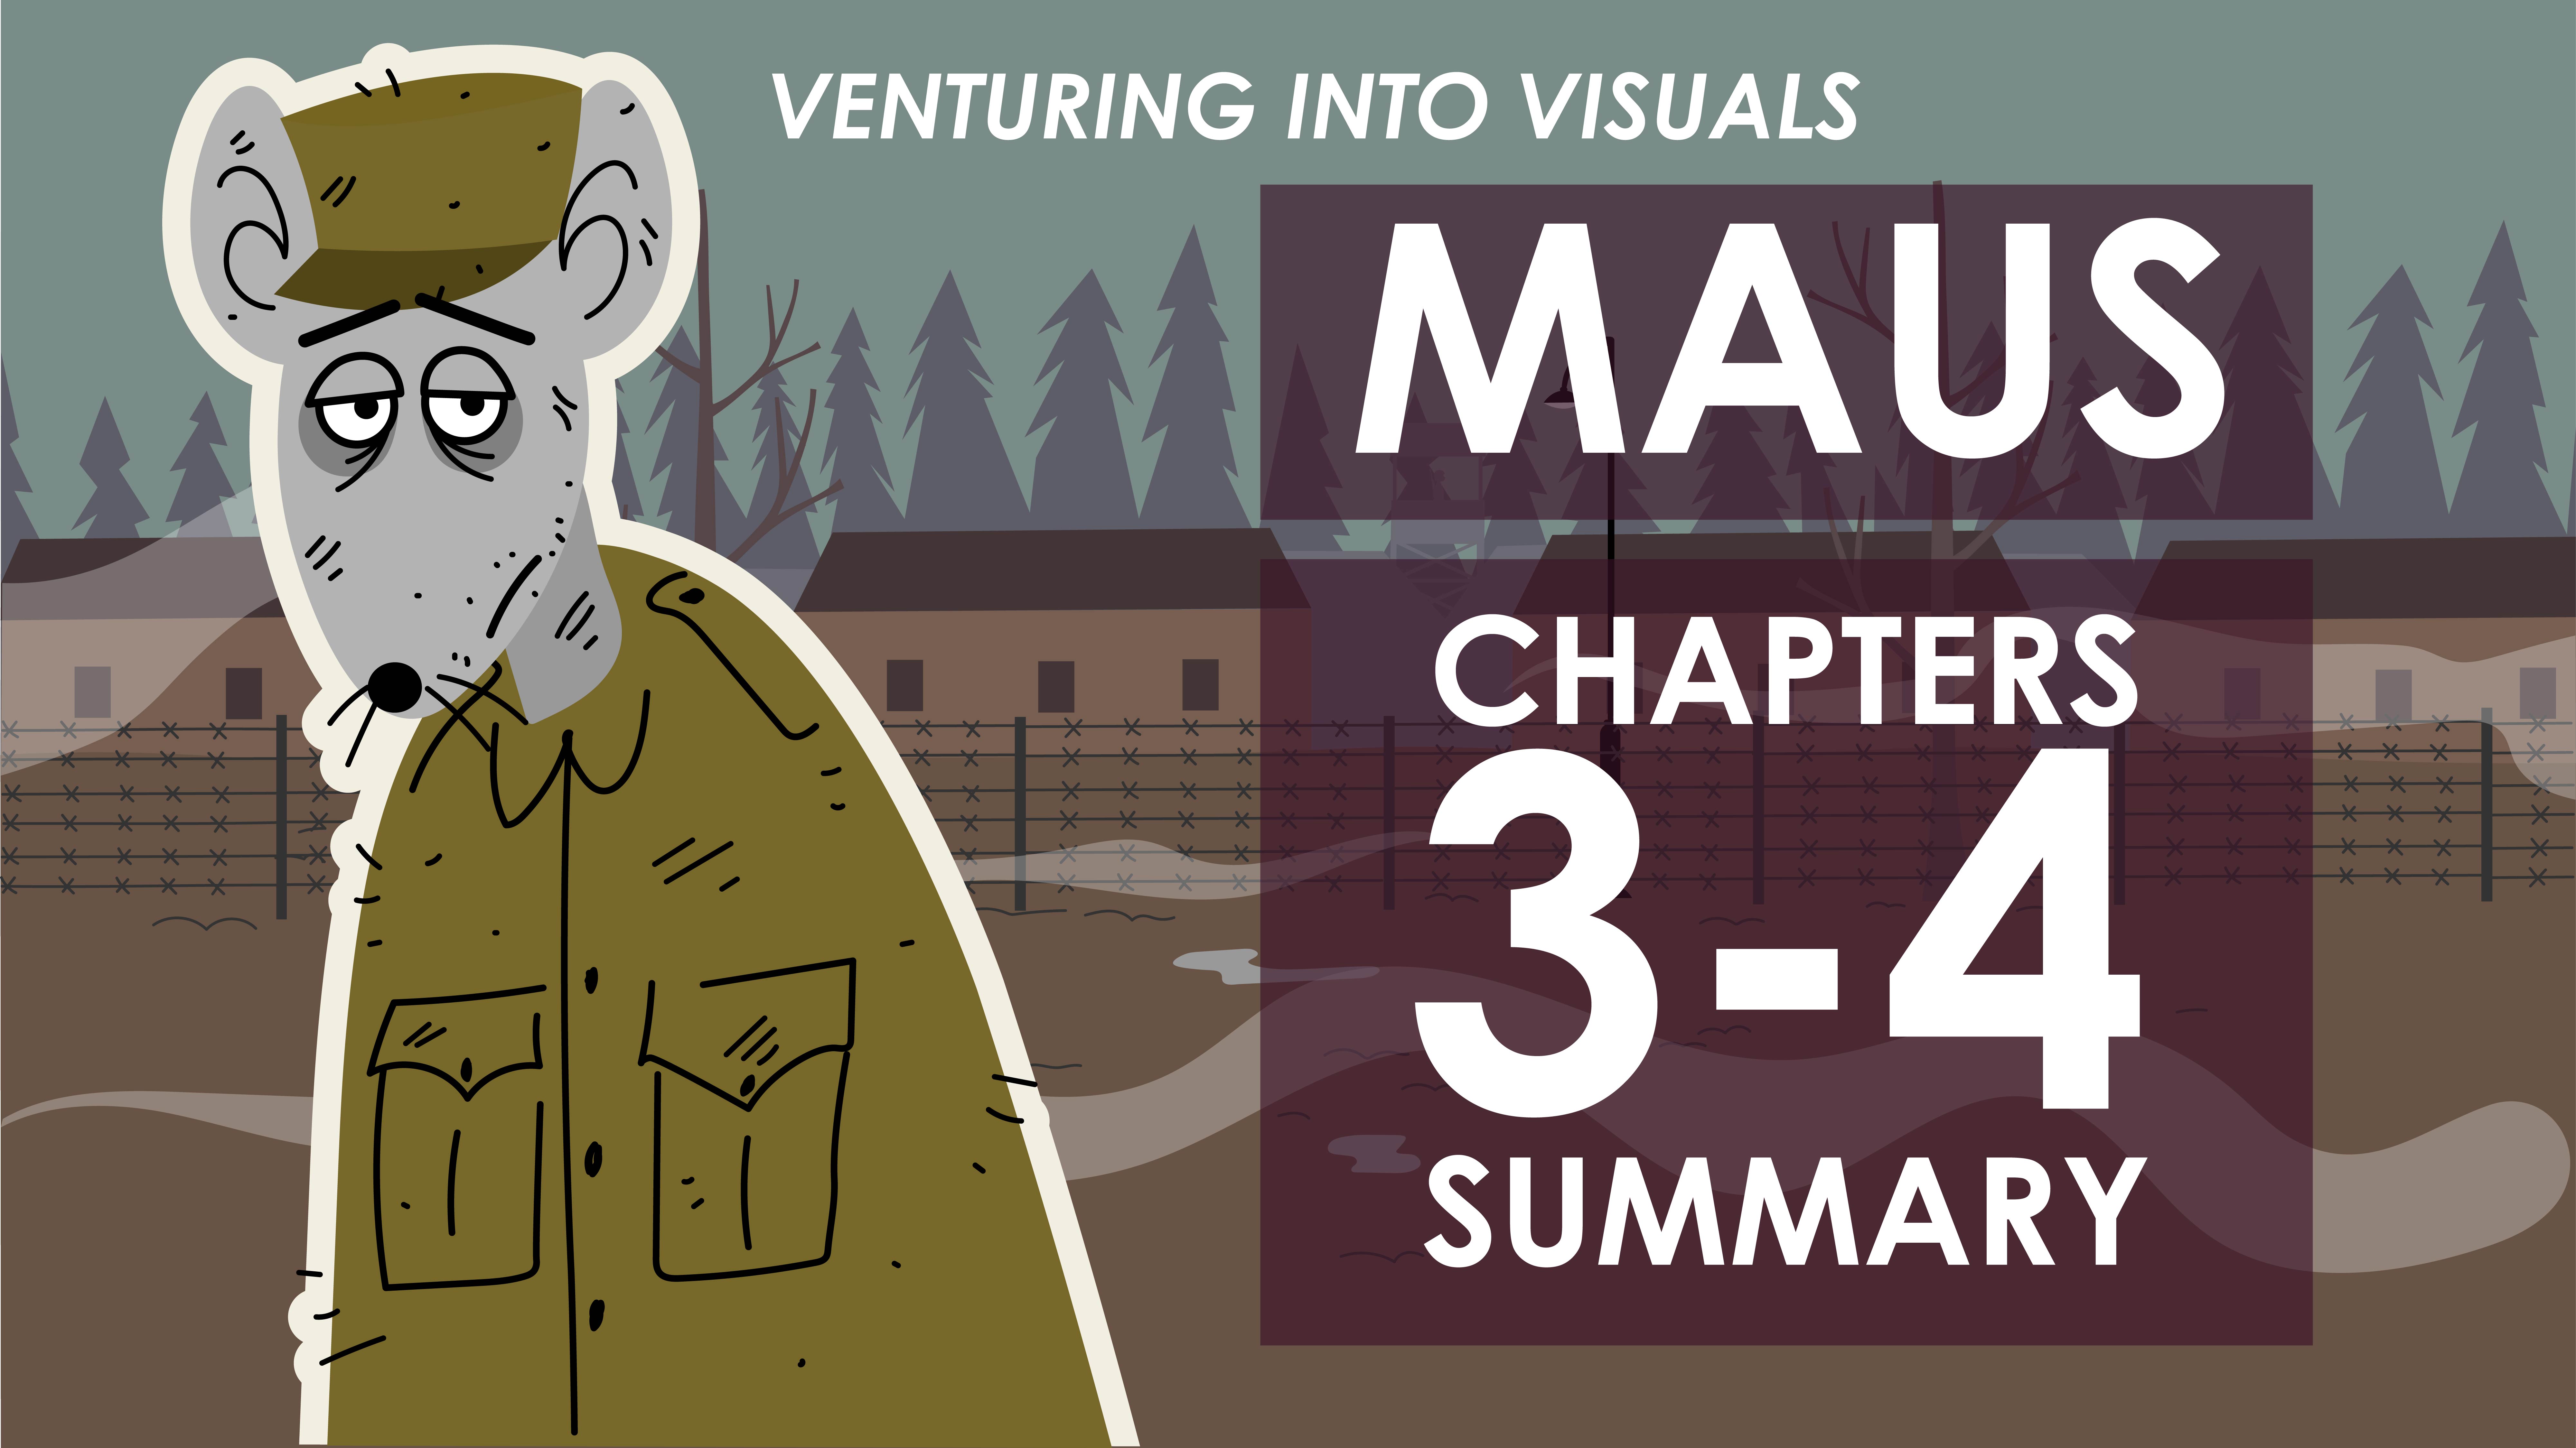 Maus - Art Spiegelman - Chapters 3-4 Summary - Venturing Into Visuals Series